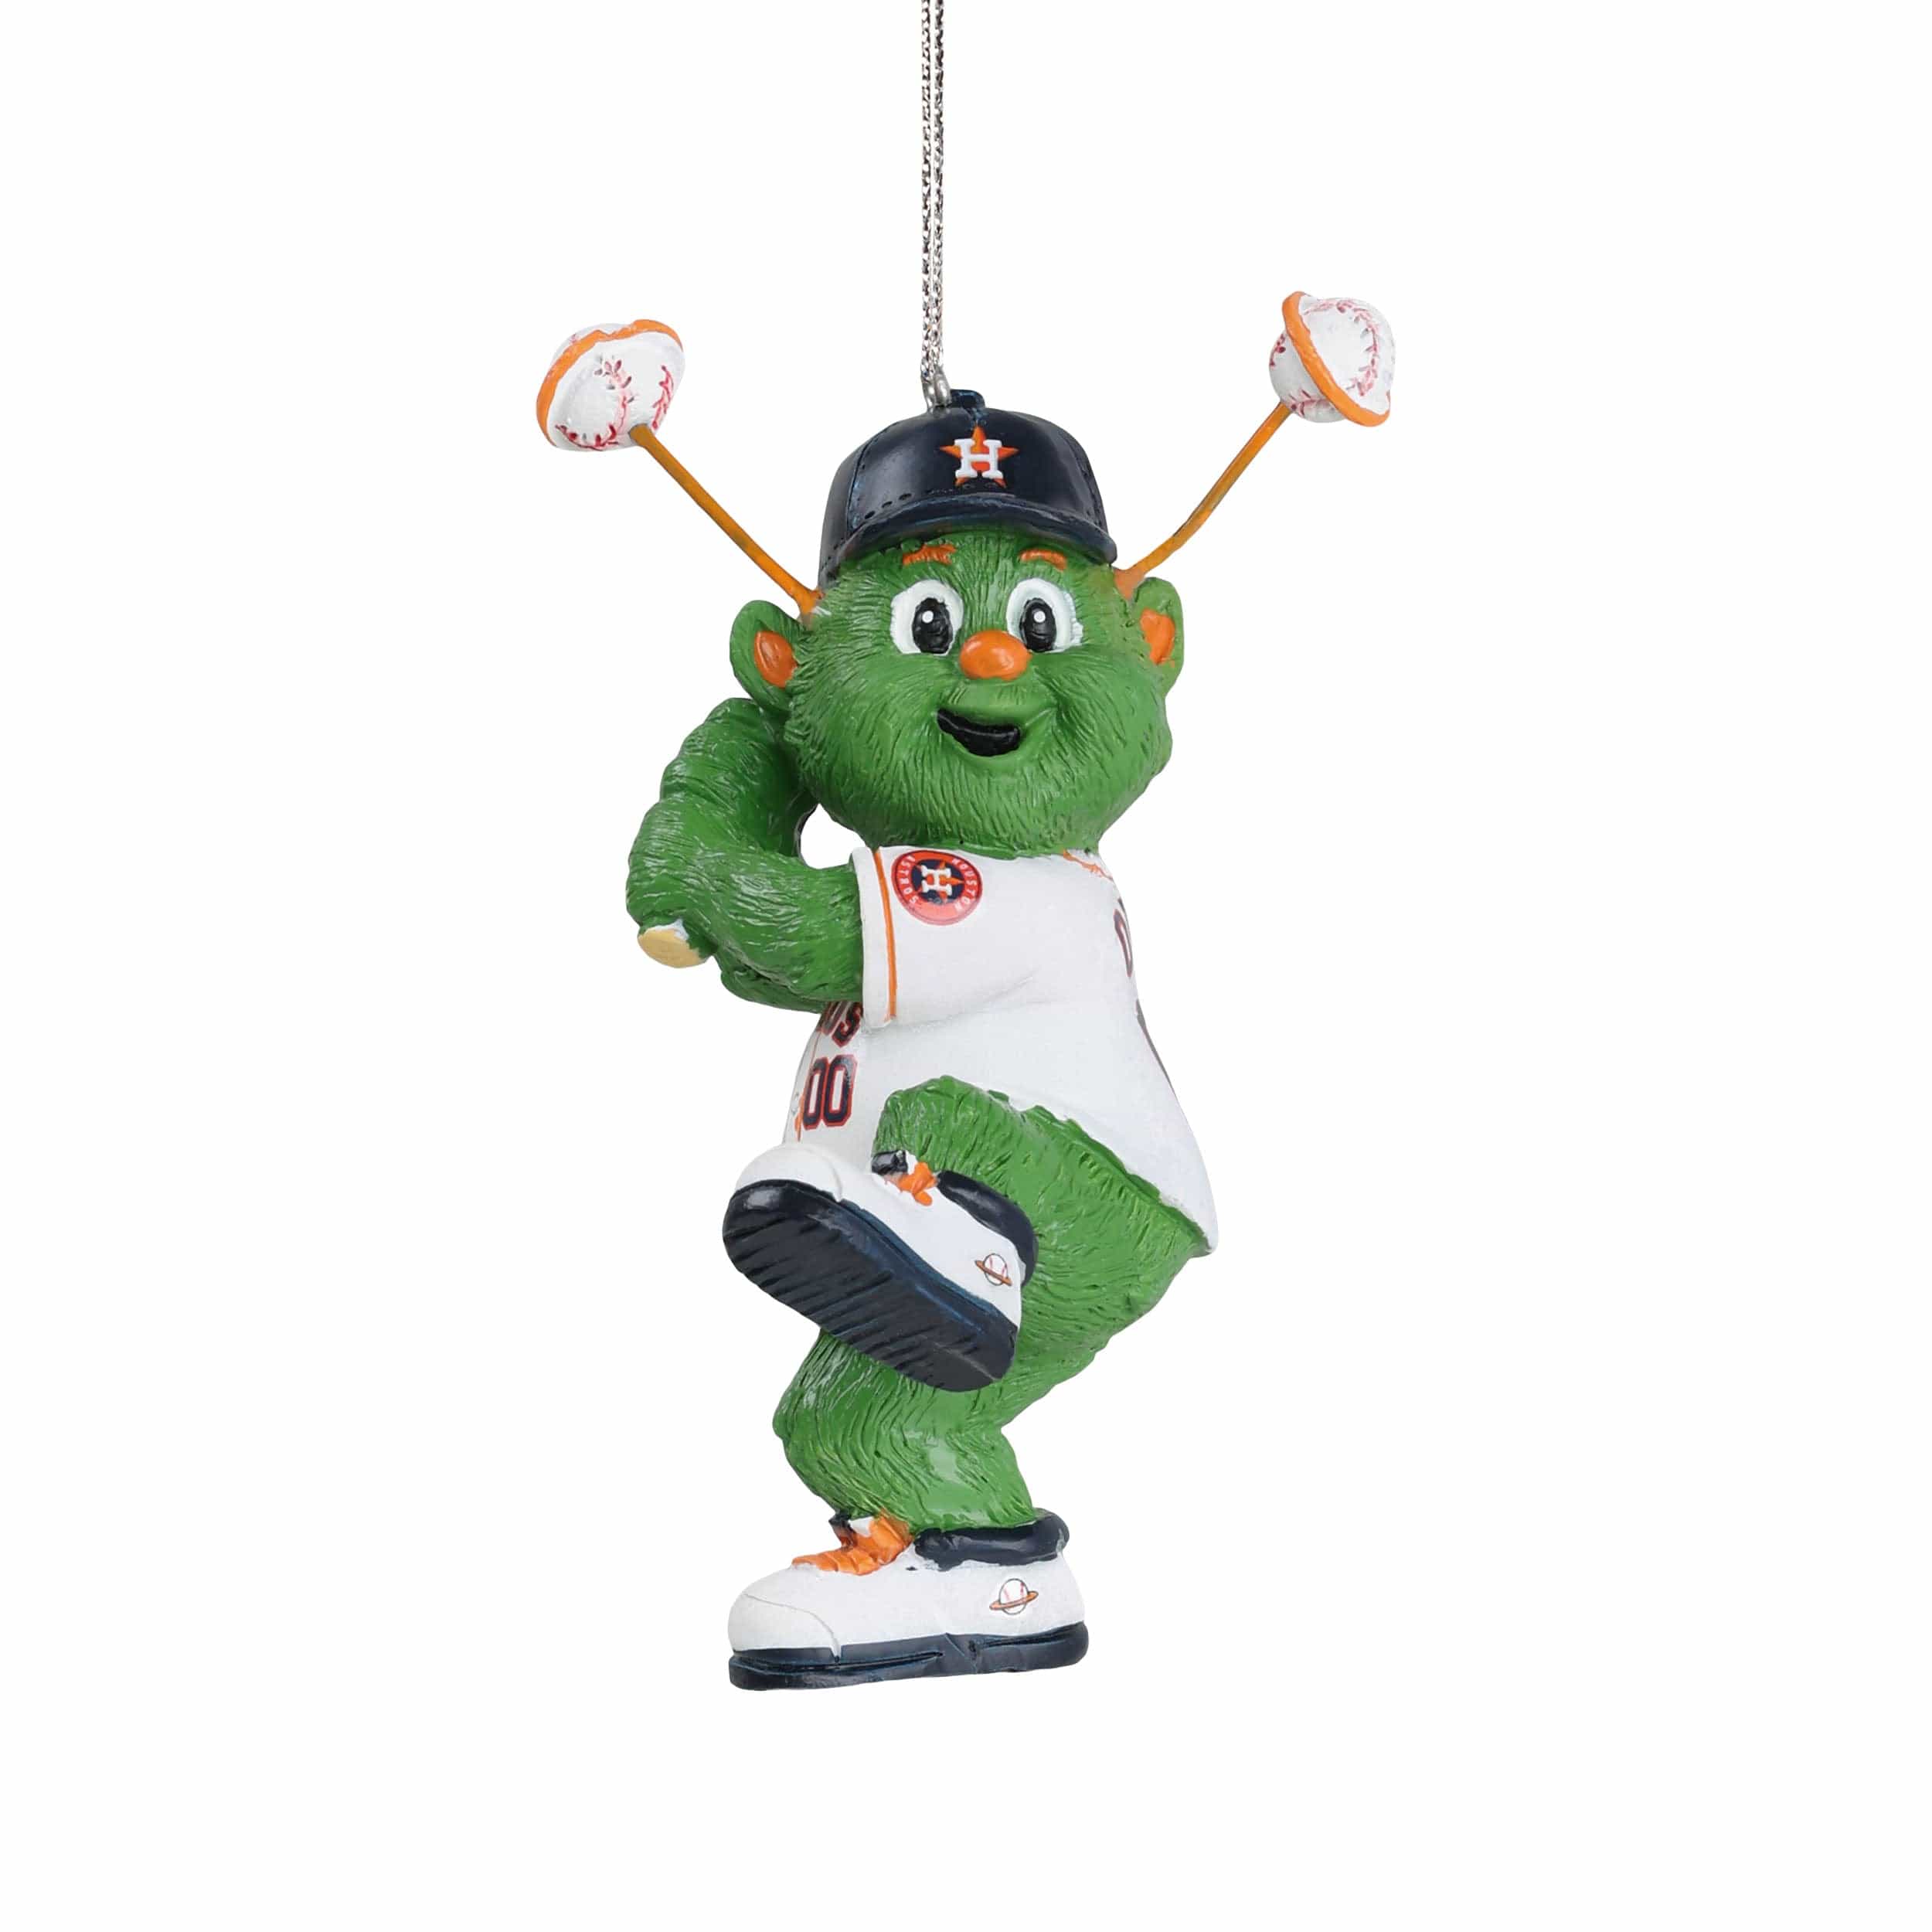 Minimalist Orbit Houston Astros Mascot MLB Licensed 